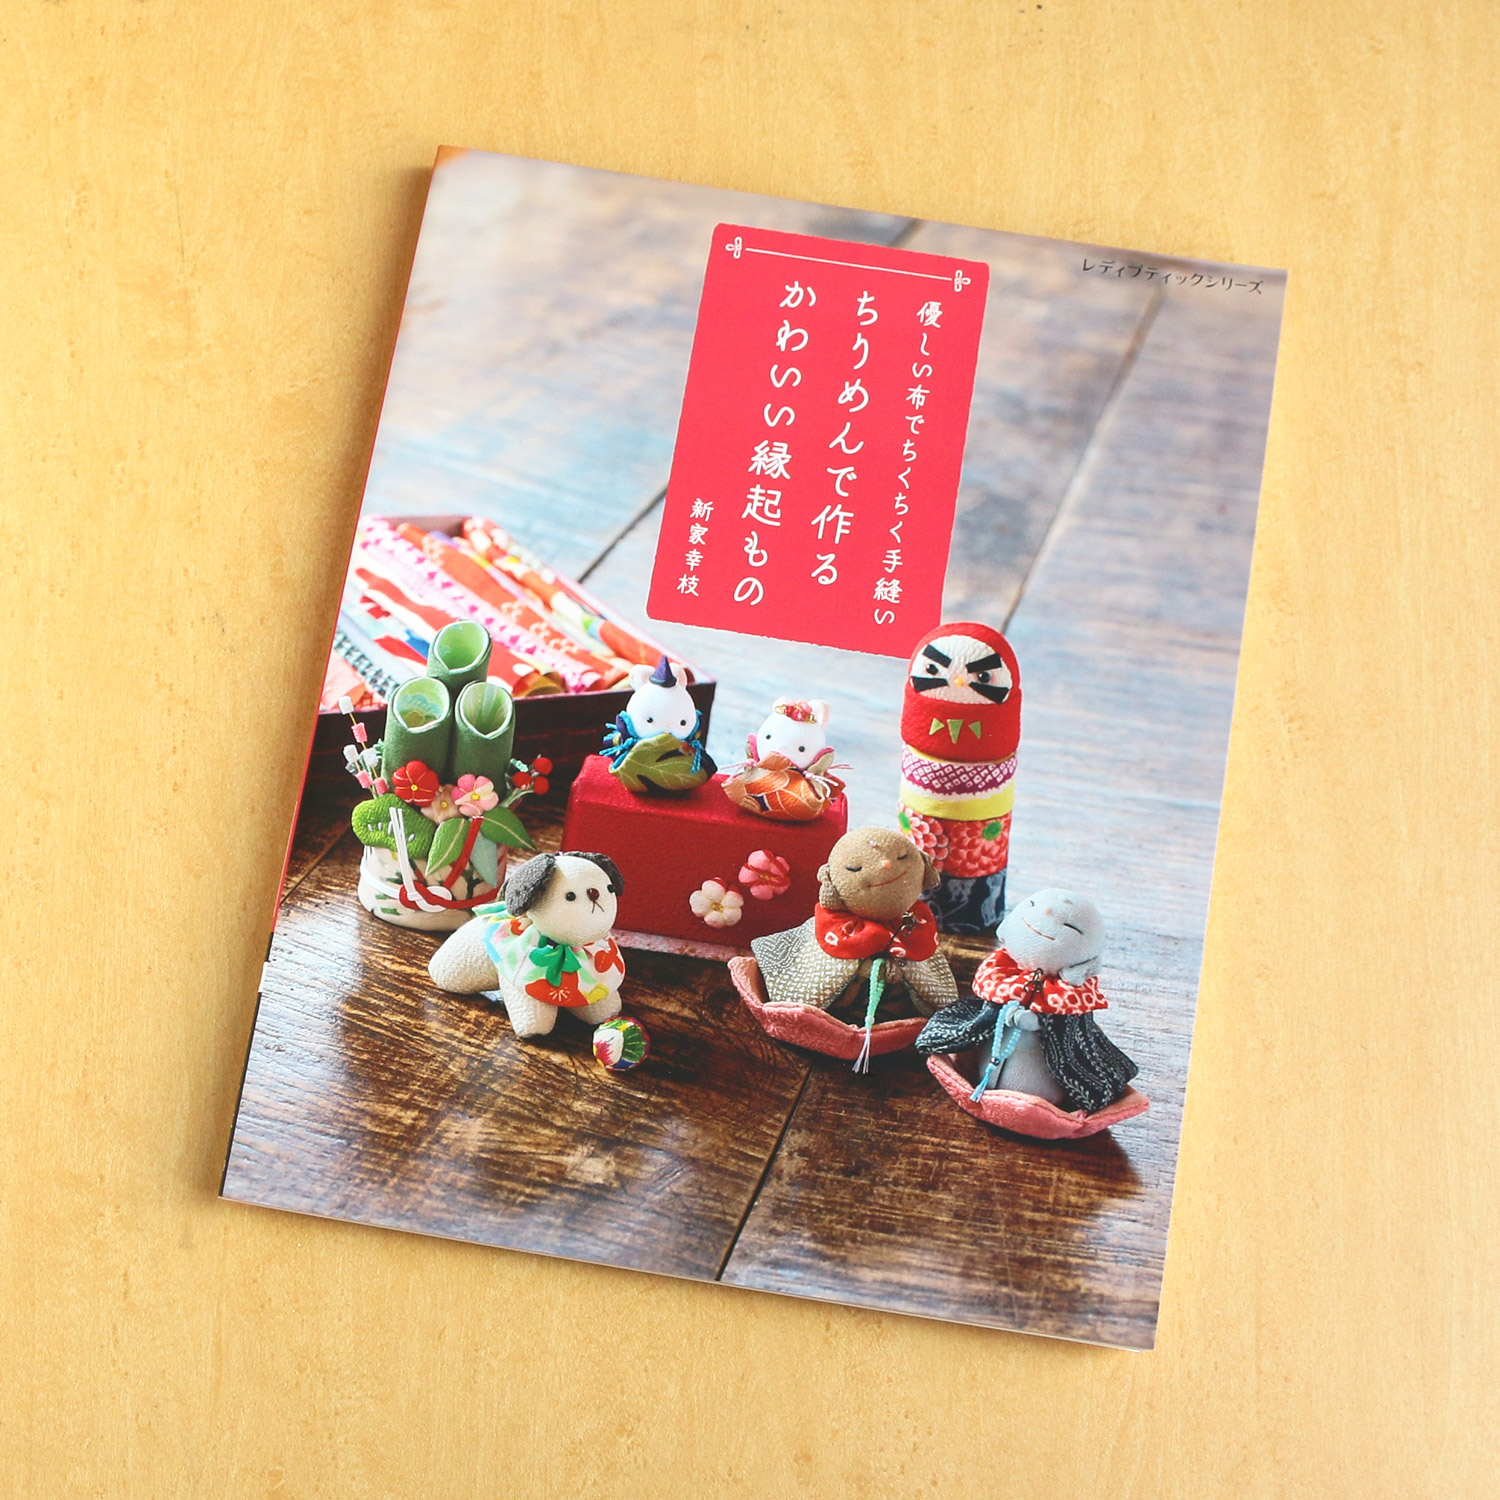 S8479 Cute lucky charms of Chirimen by) Yukie Shinke(book)